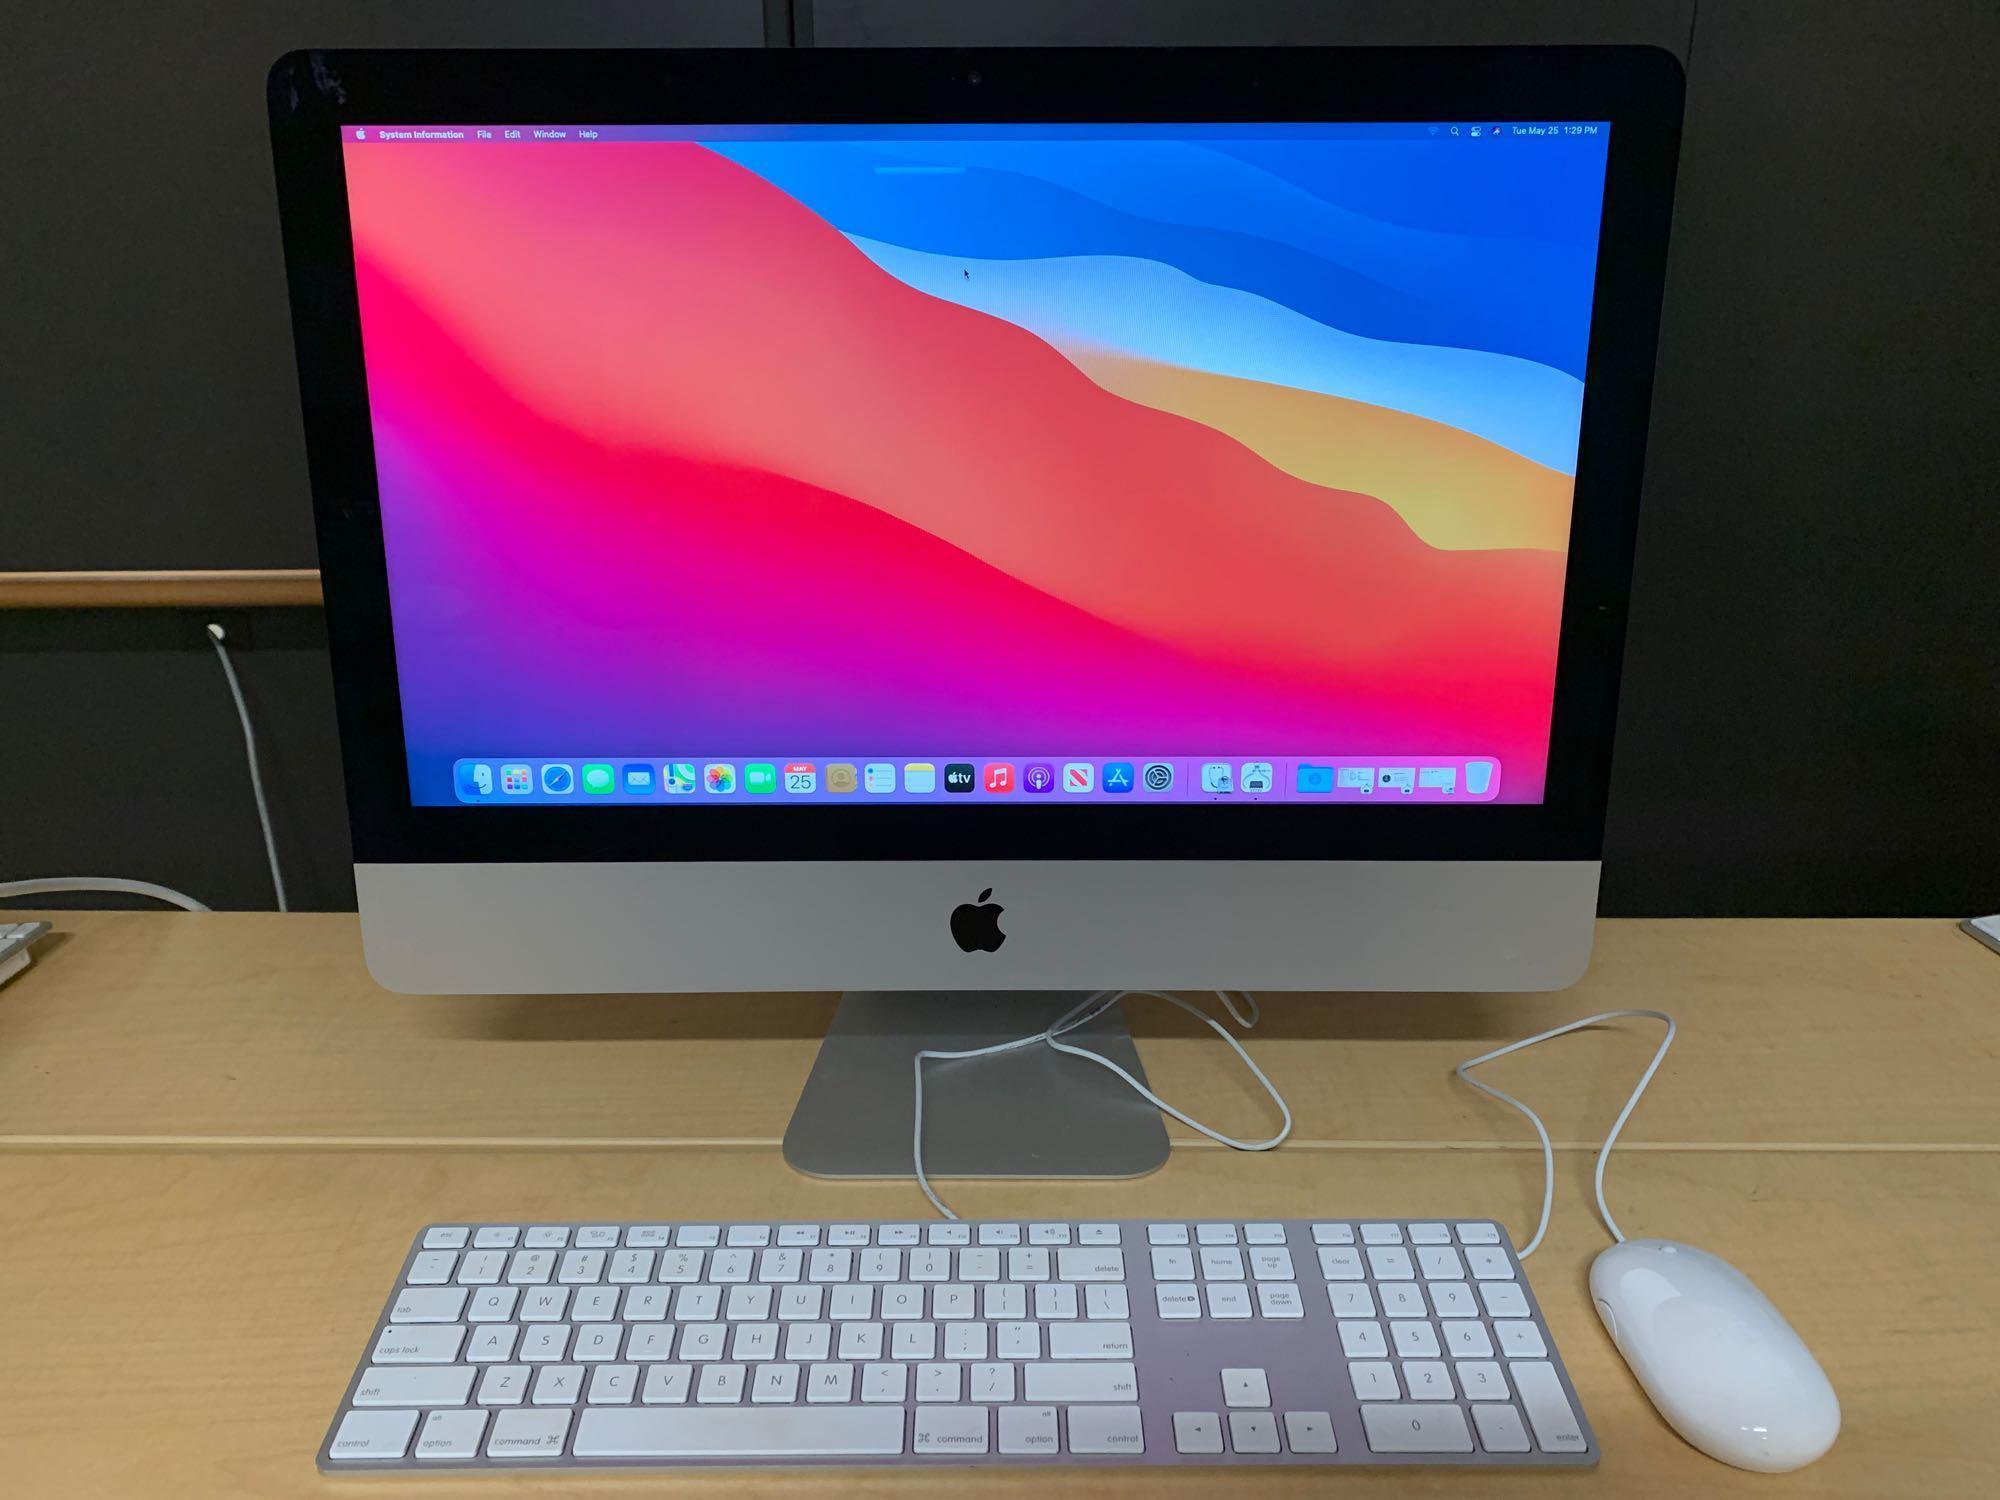 Apple iMac16,1 A1418 21.5" LCD AIO Dual Core Intel i5 1.6GHz 8GB 1TB Wifi Big Sur 11.0.1 Computer